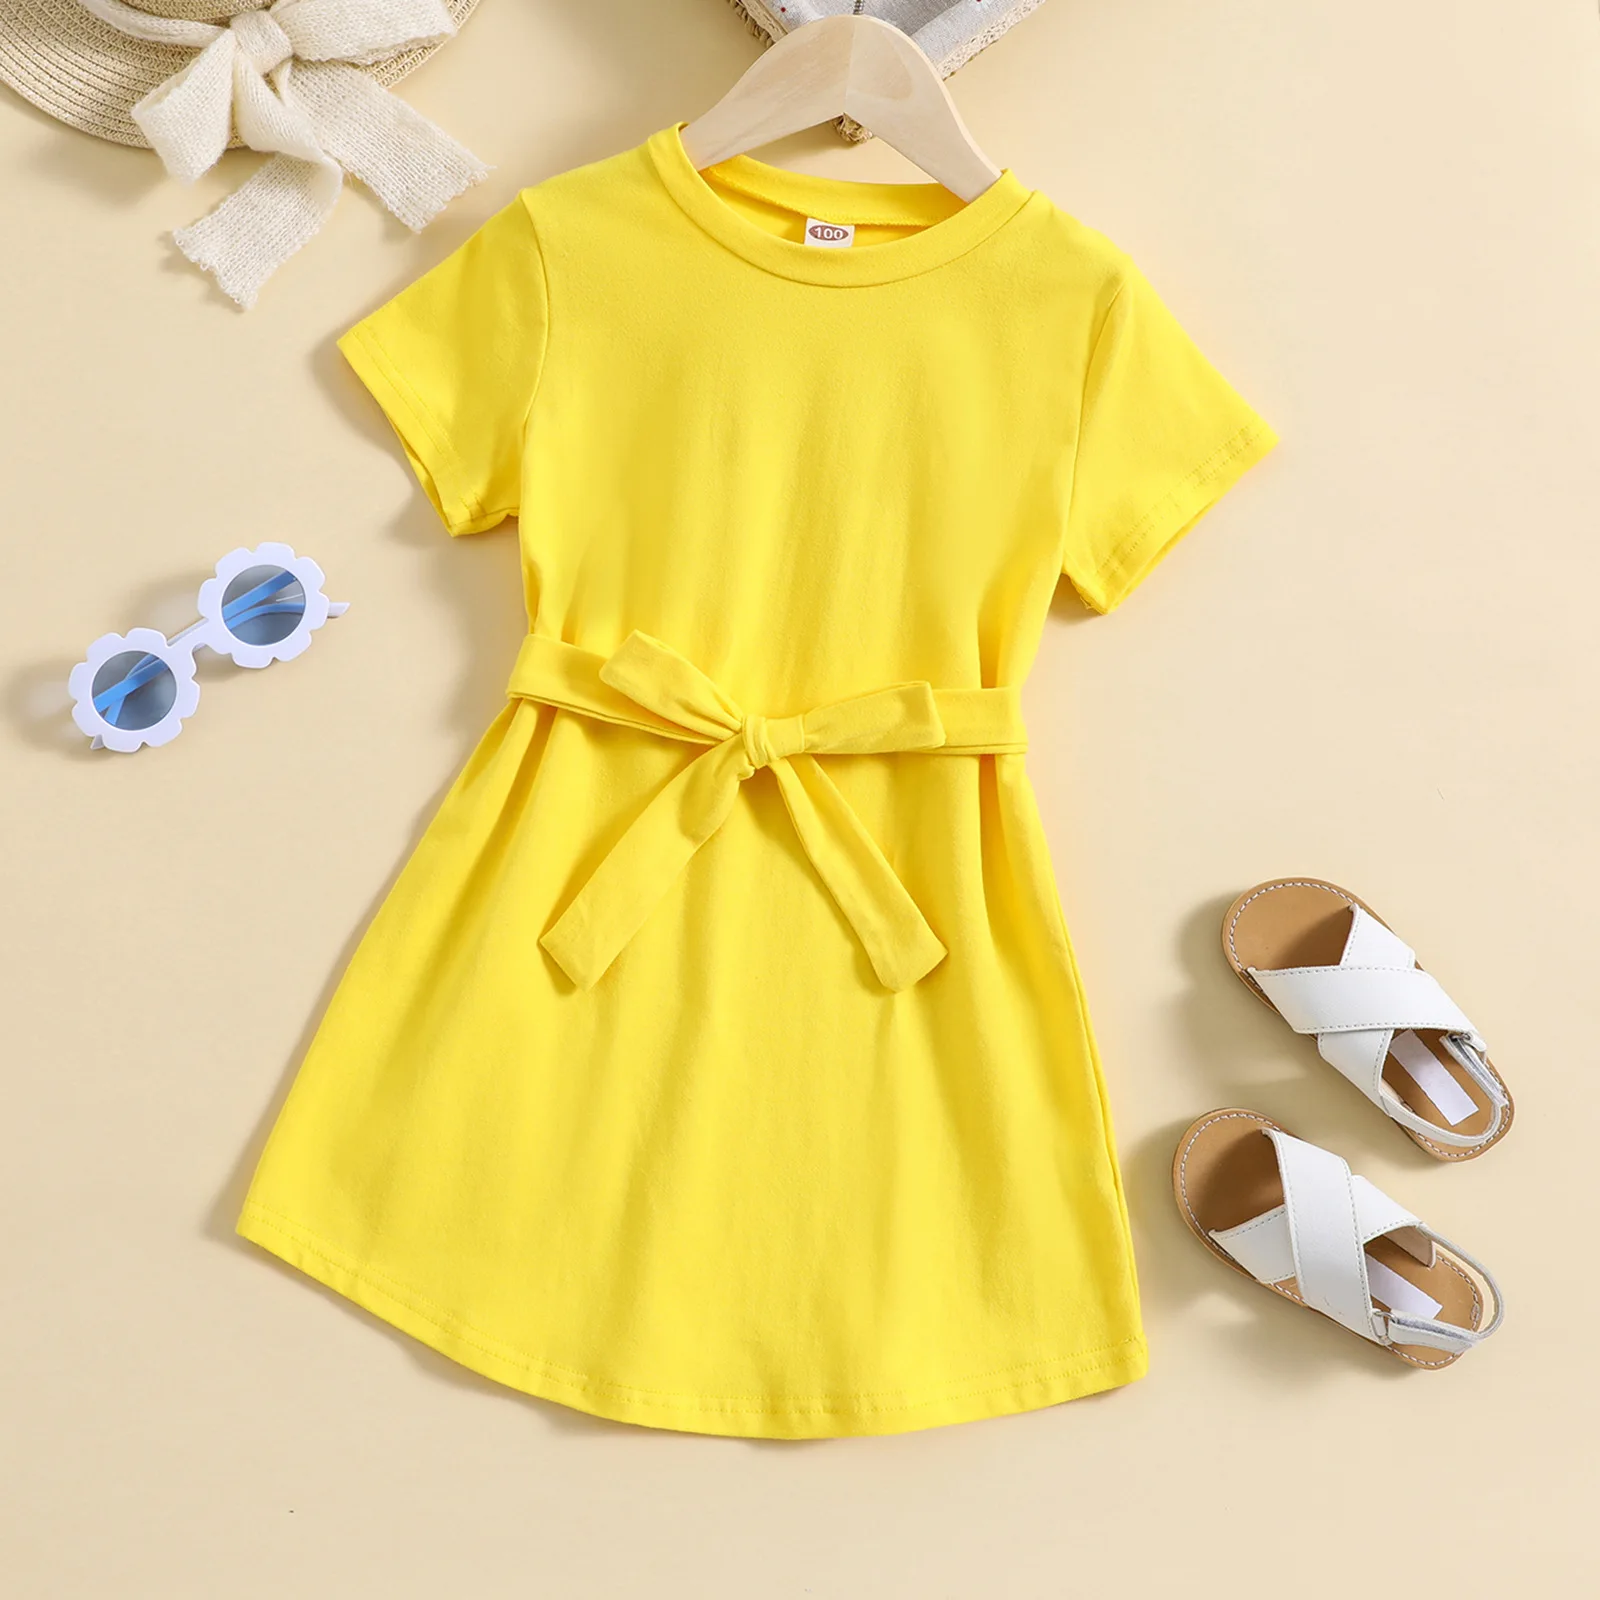 Korean style girls dress casual solid toddler girls short sleeve skirts summer boutique children's clothing kids dresses